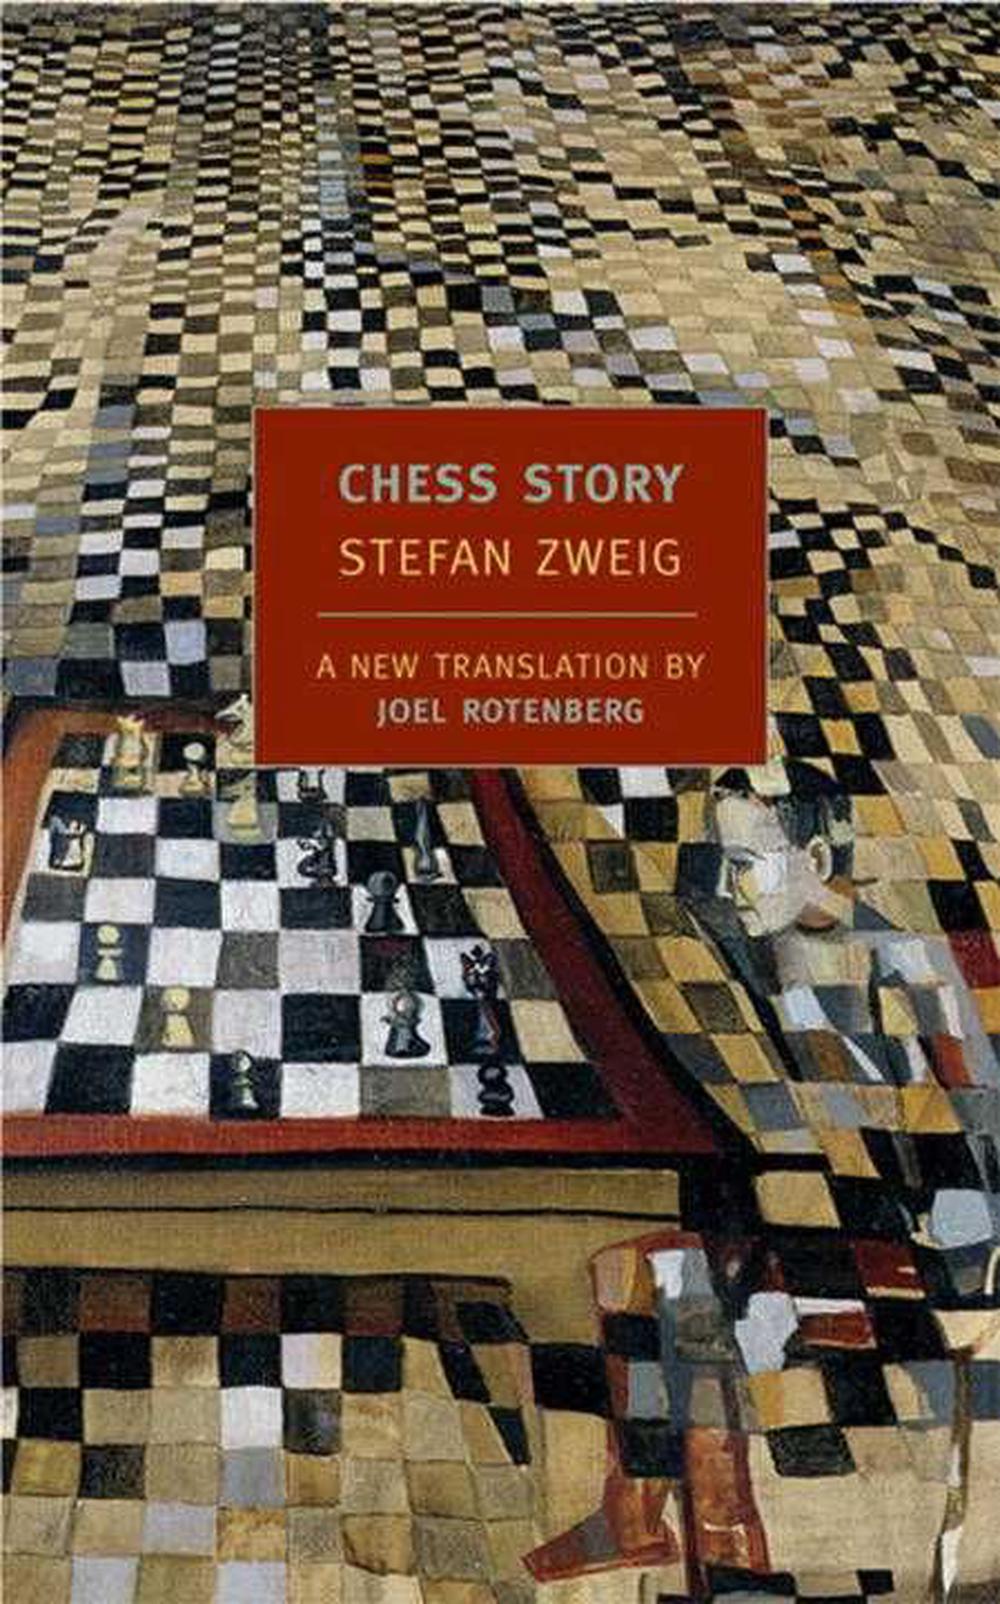 chess story zweig